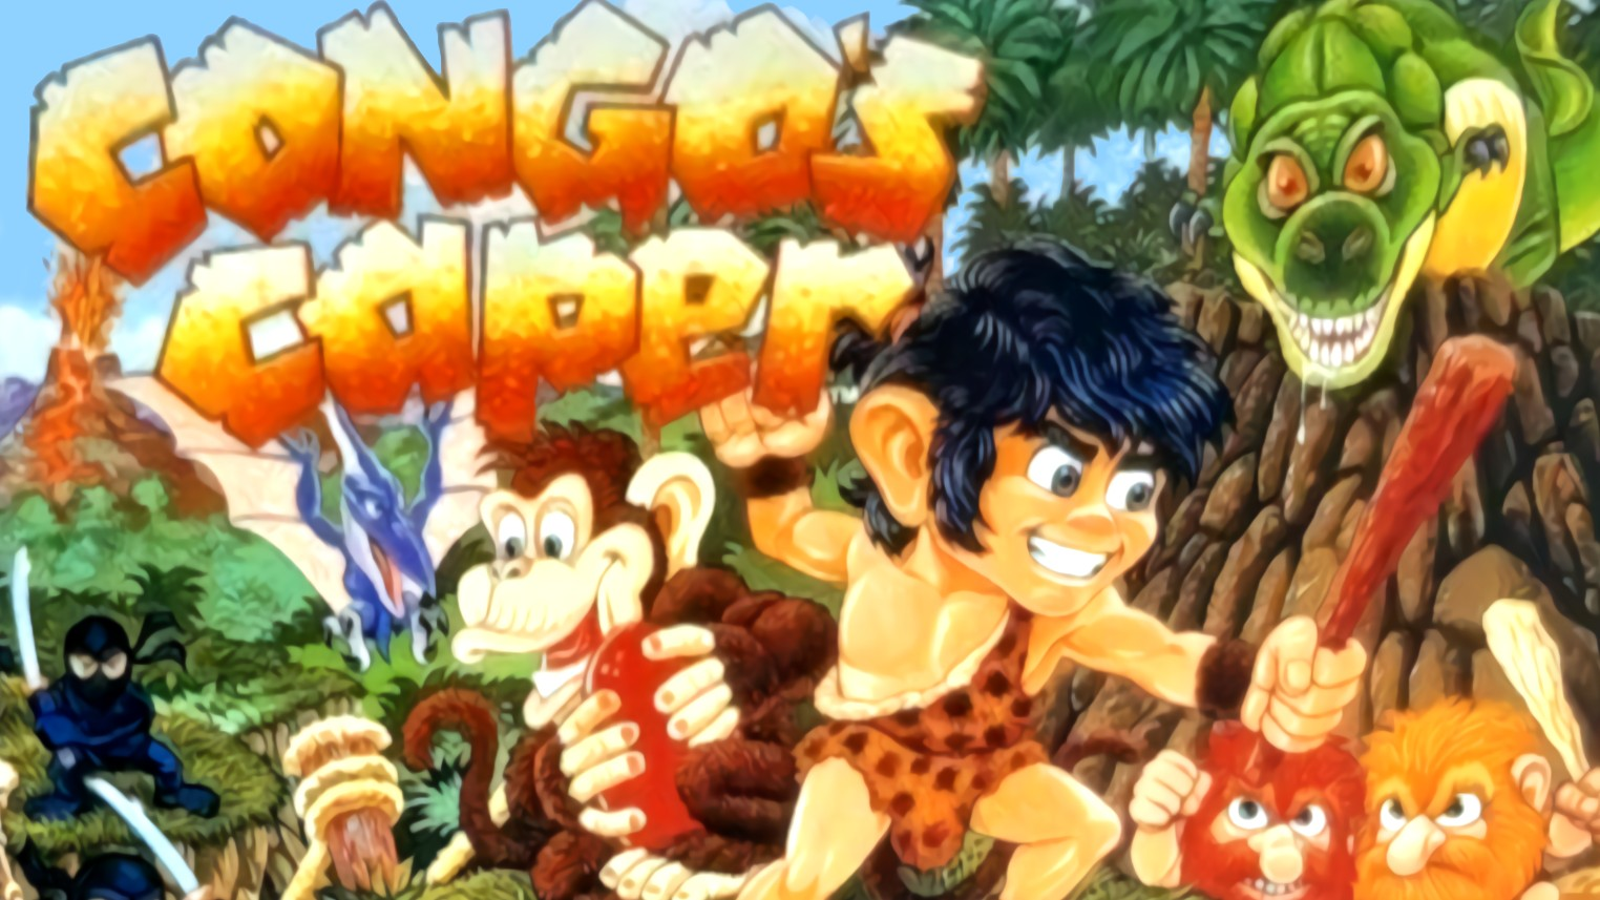 Congo's Caper-Super Nintendo-Parte 1 